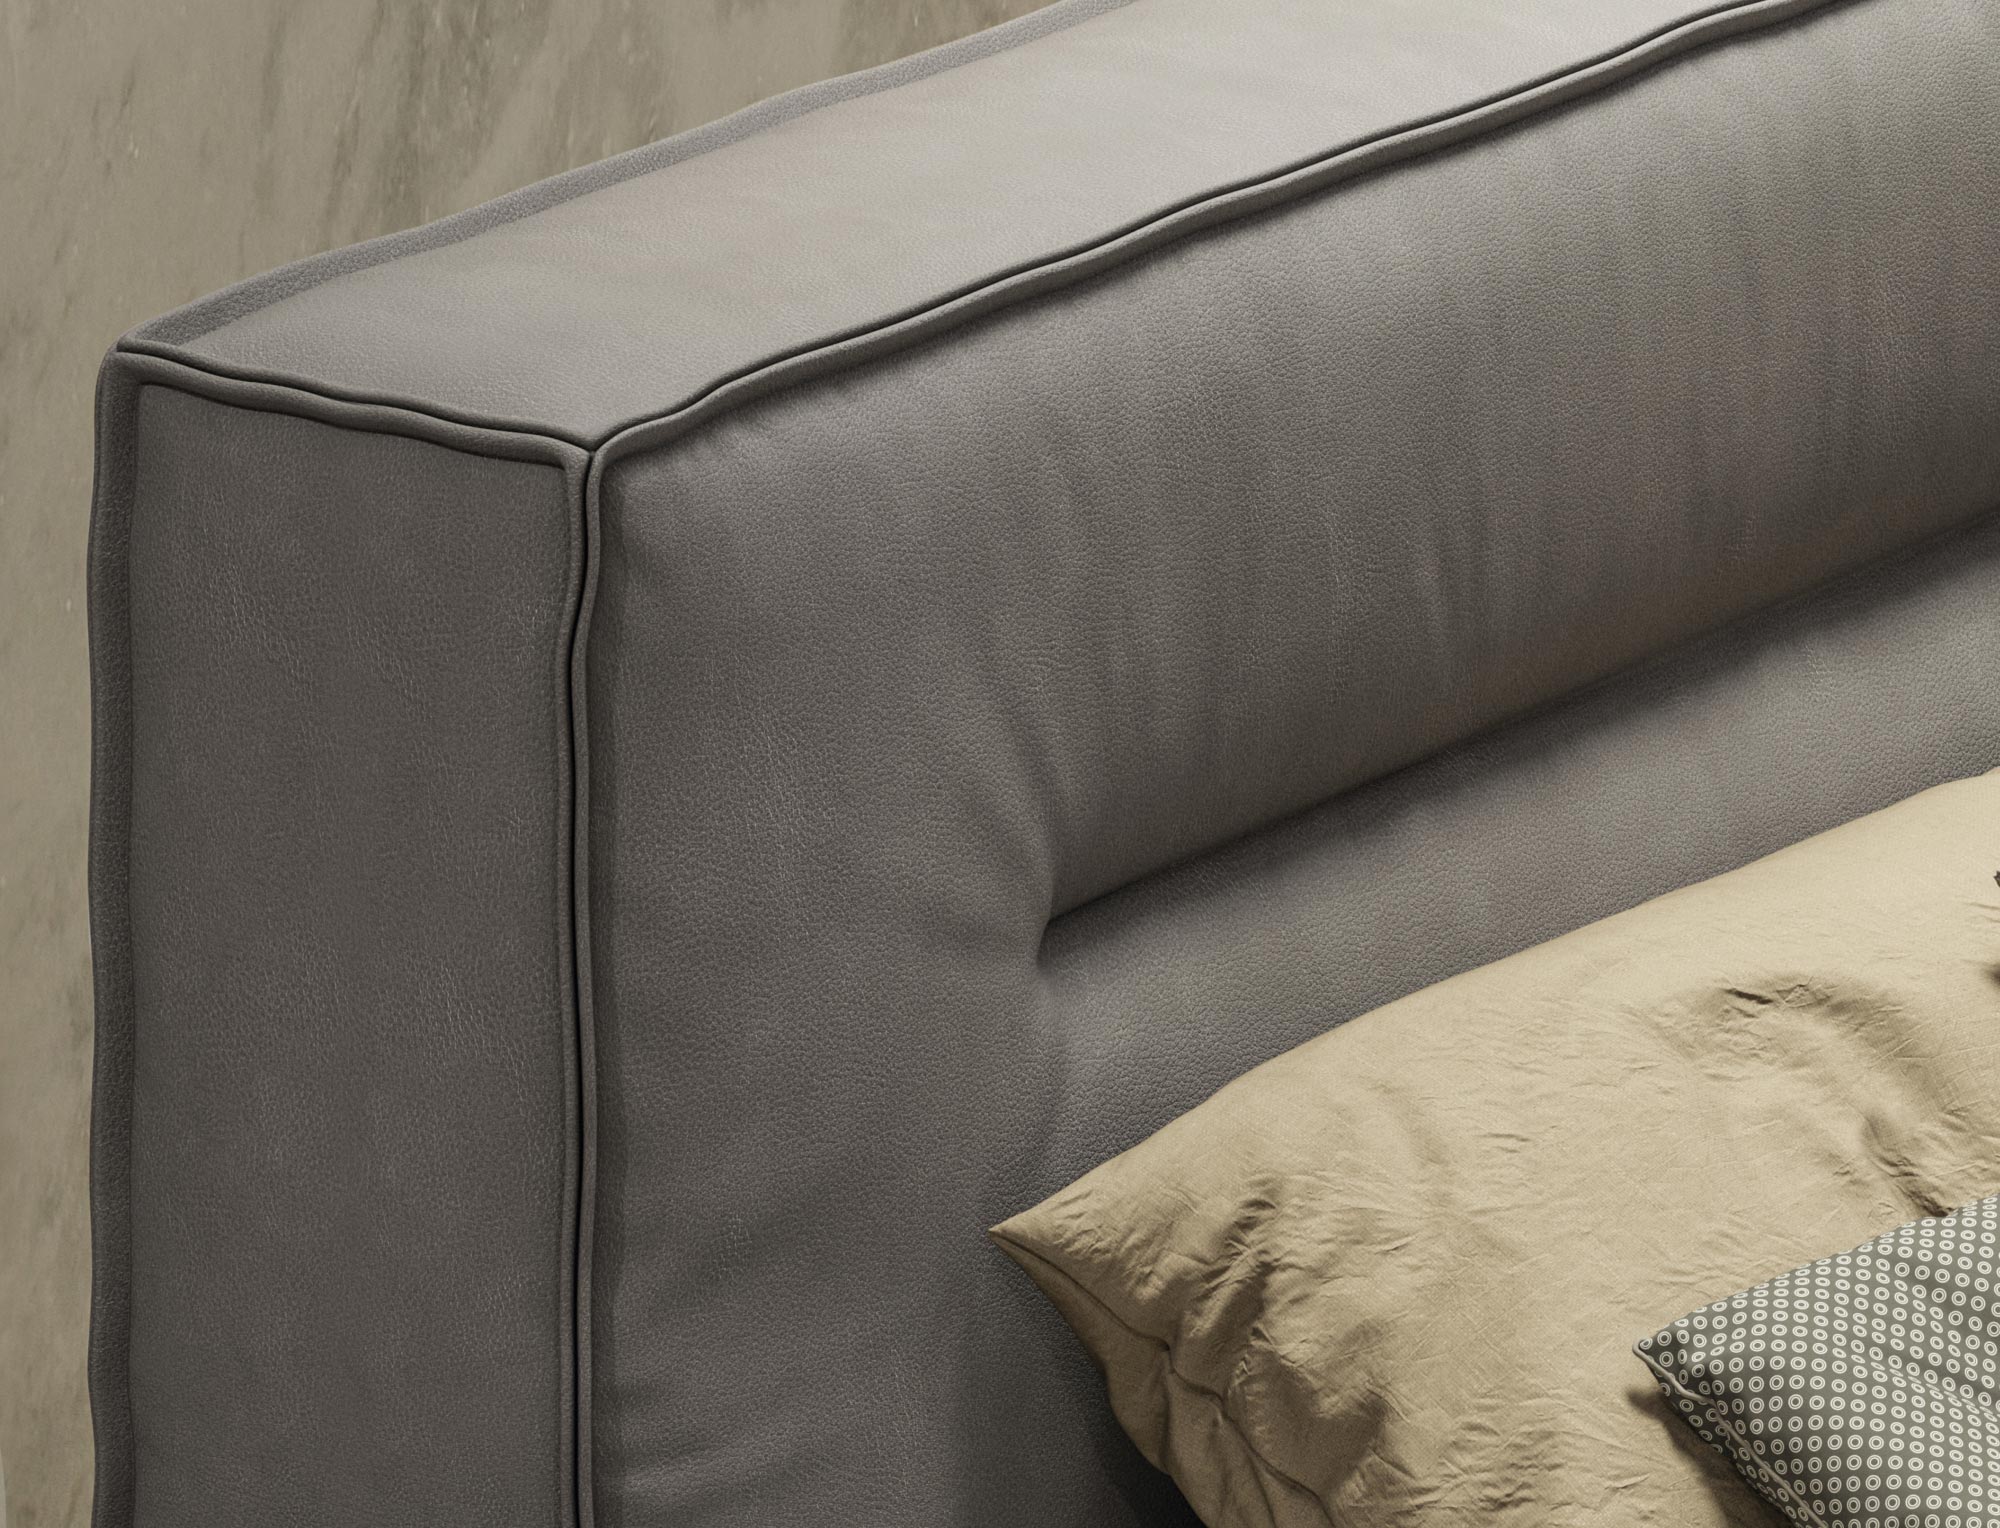 Lamod Italia Hollywood - Italian Contemporary Grey Leather Bed-Bed-VIG-Wall2Wall Furnishings